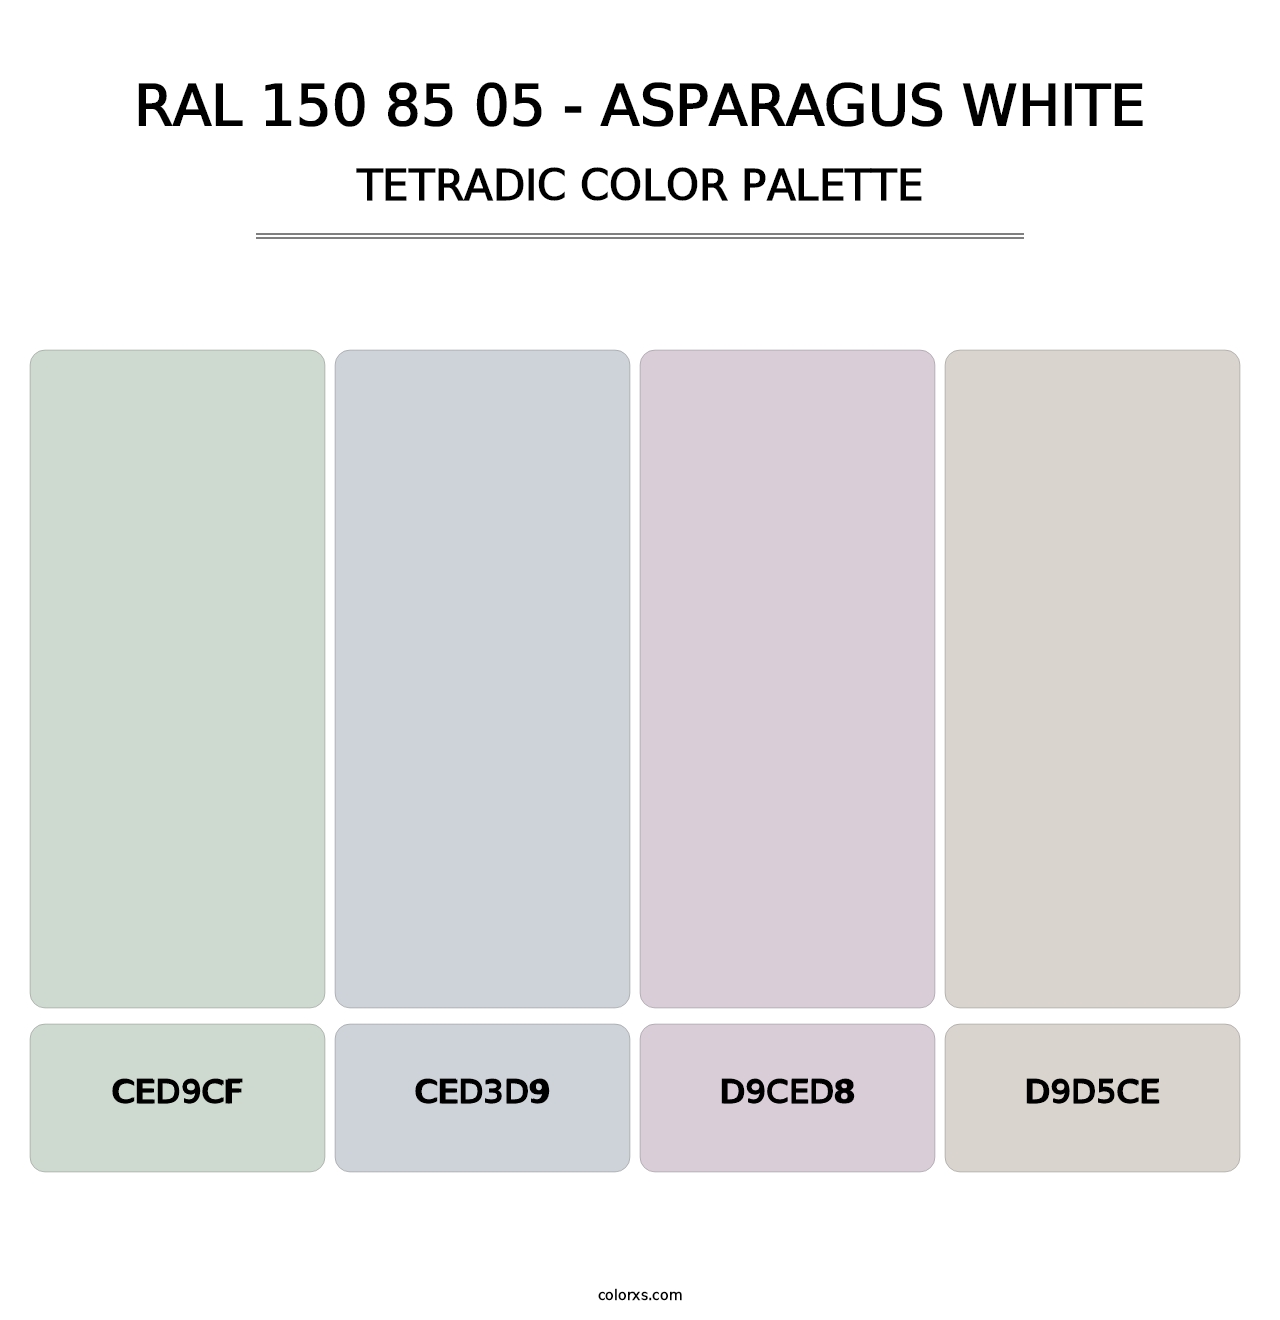 RAL 150 85 05 - Asparagus White - Tetradic Color Palette